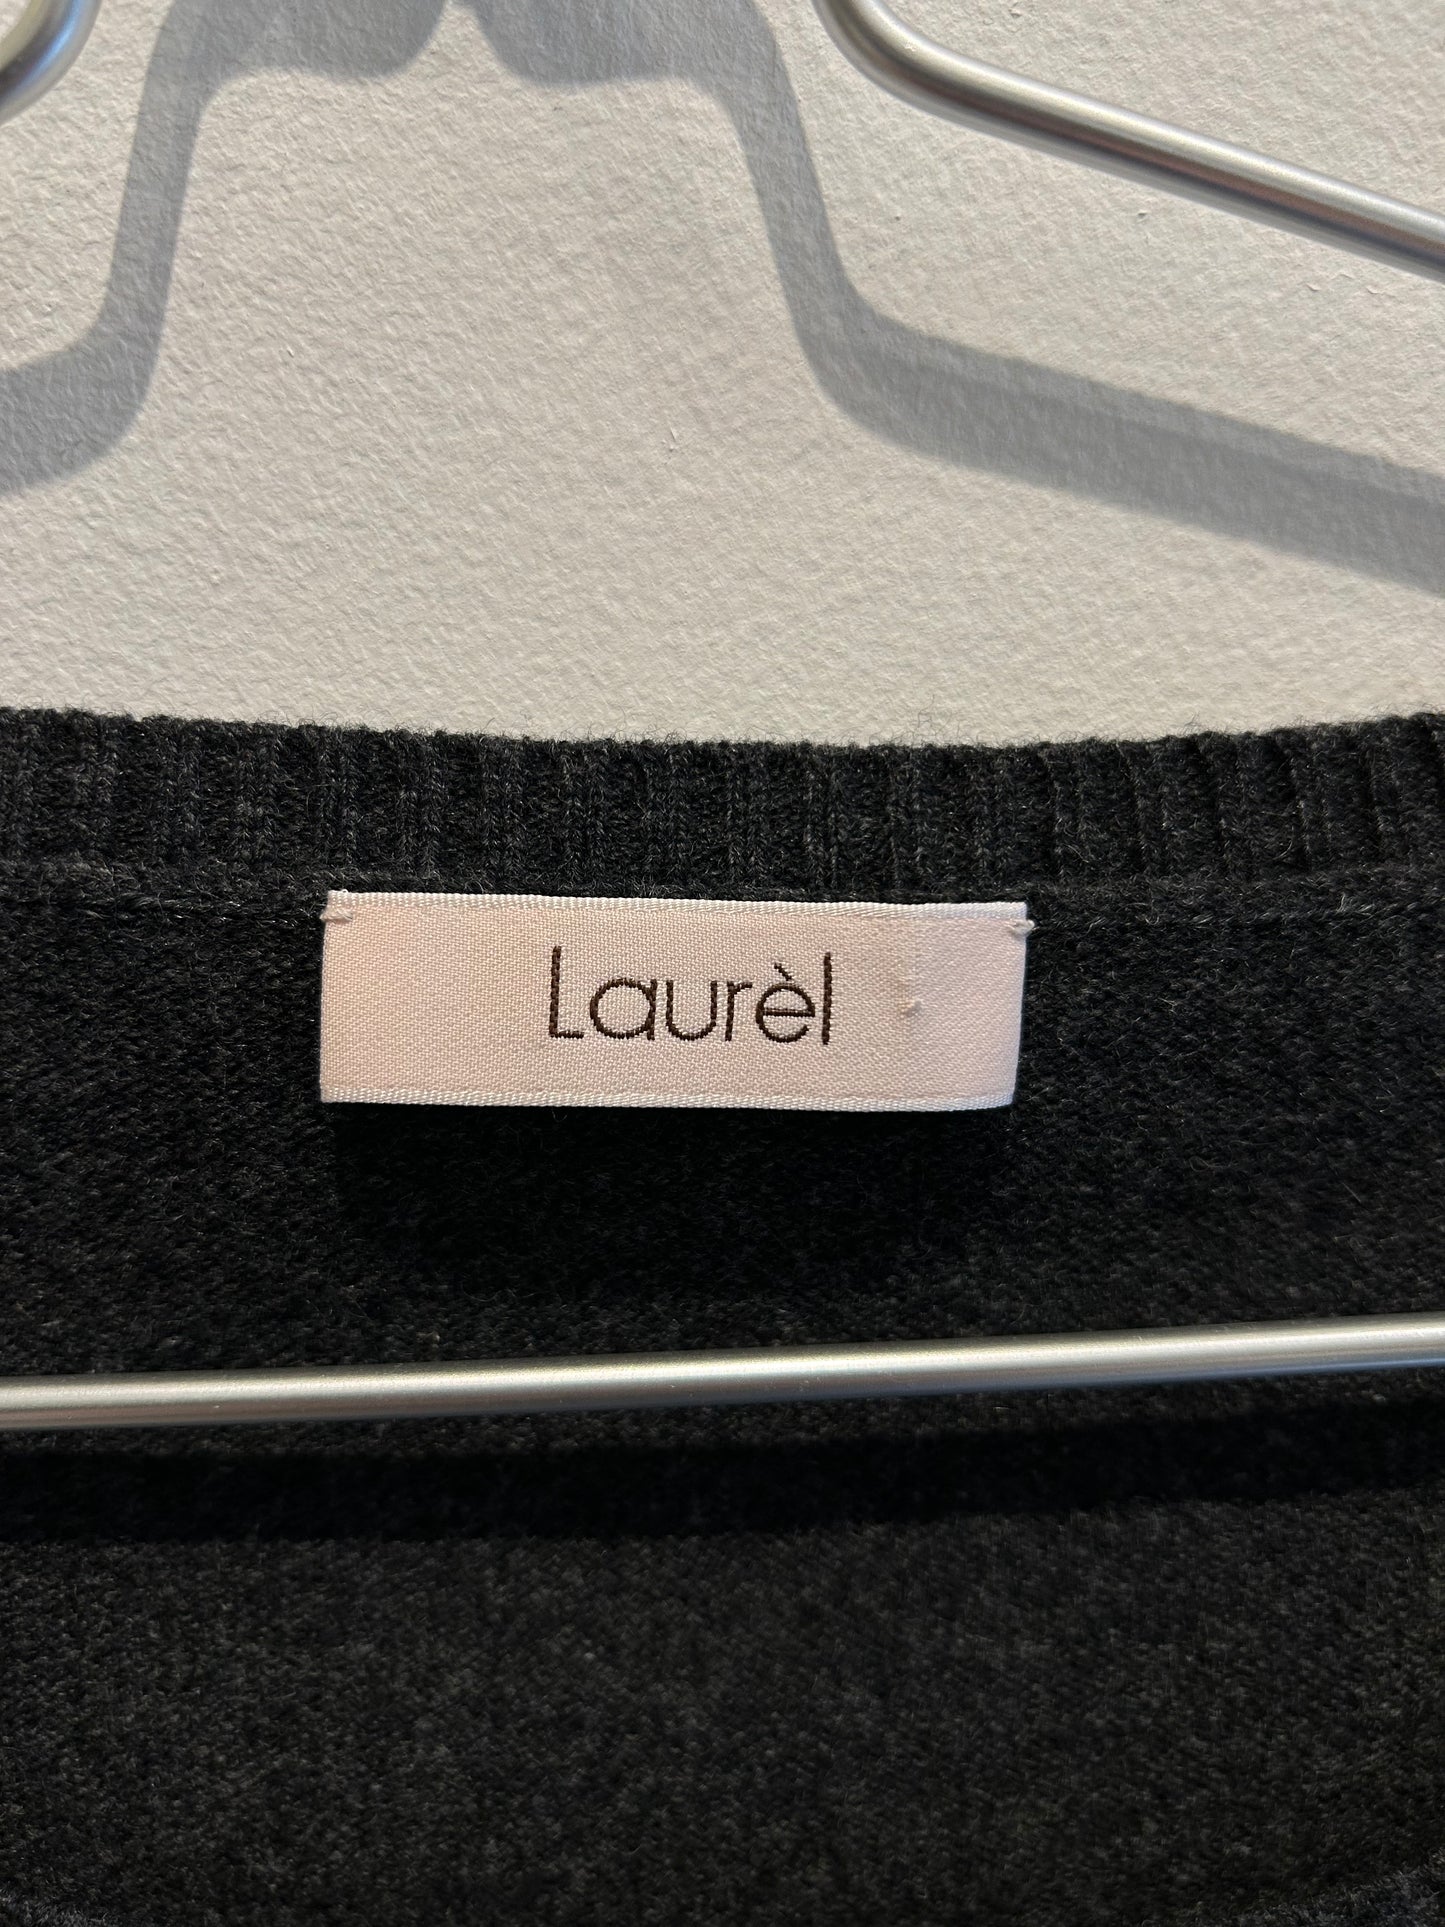 LAUREL knit dark grey shirt